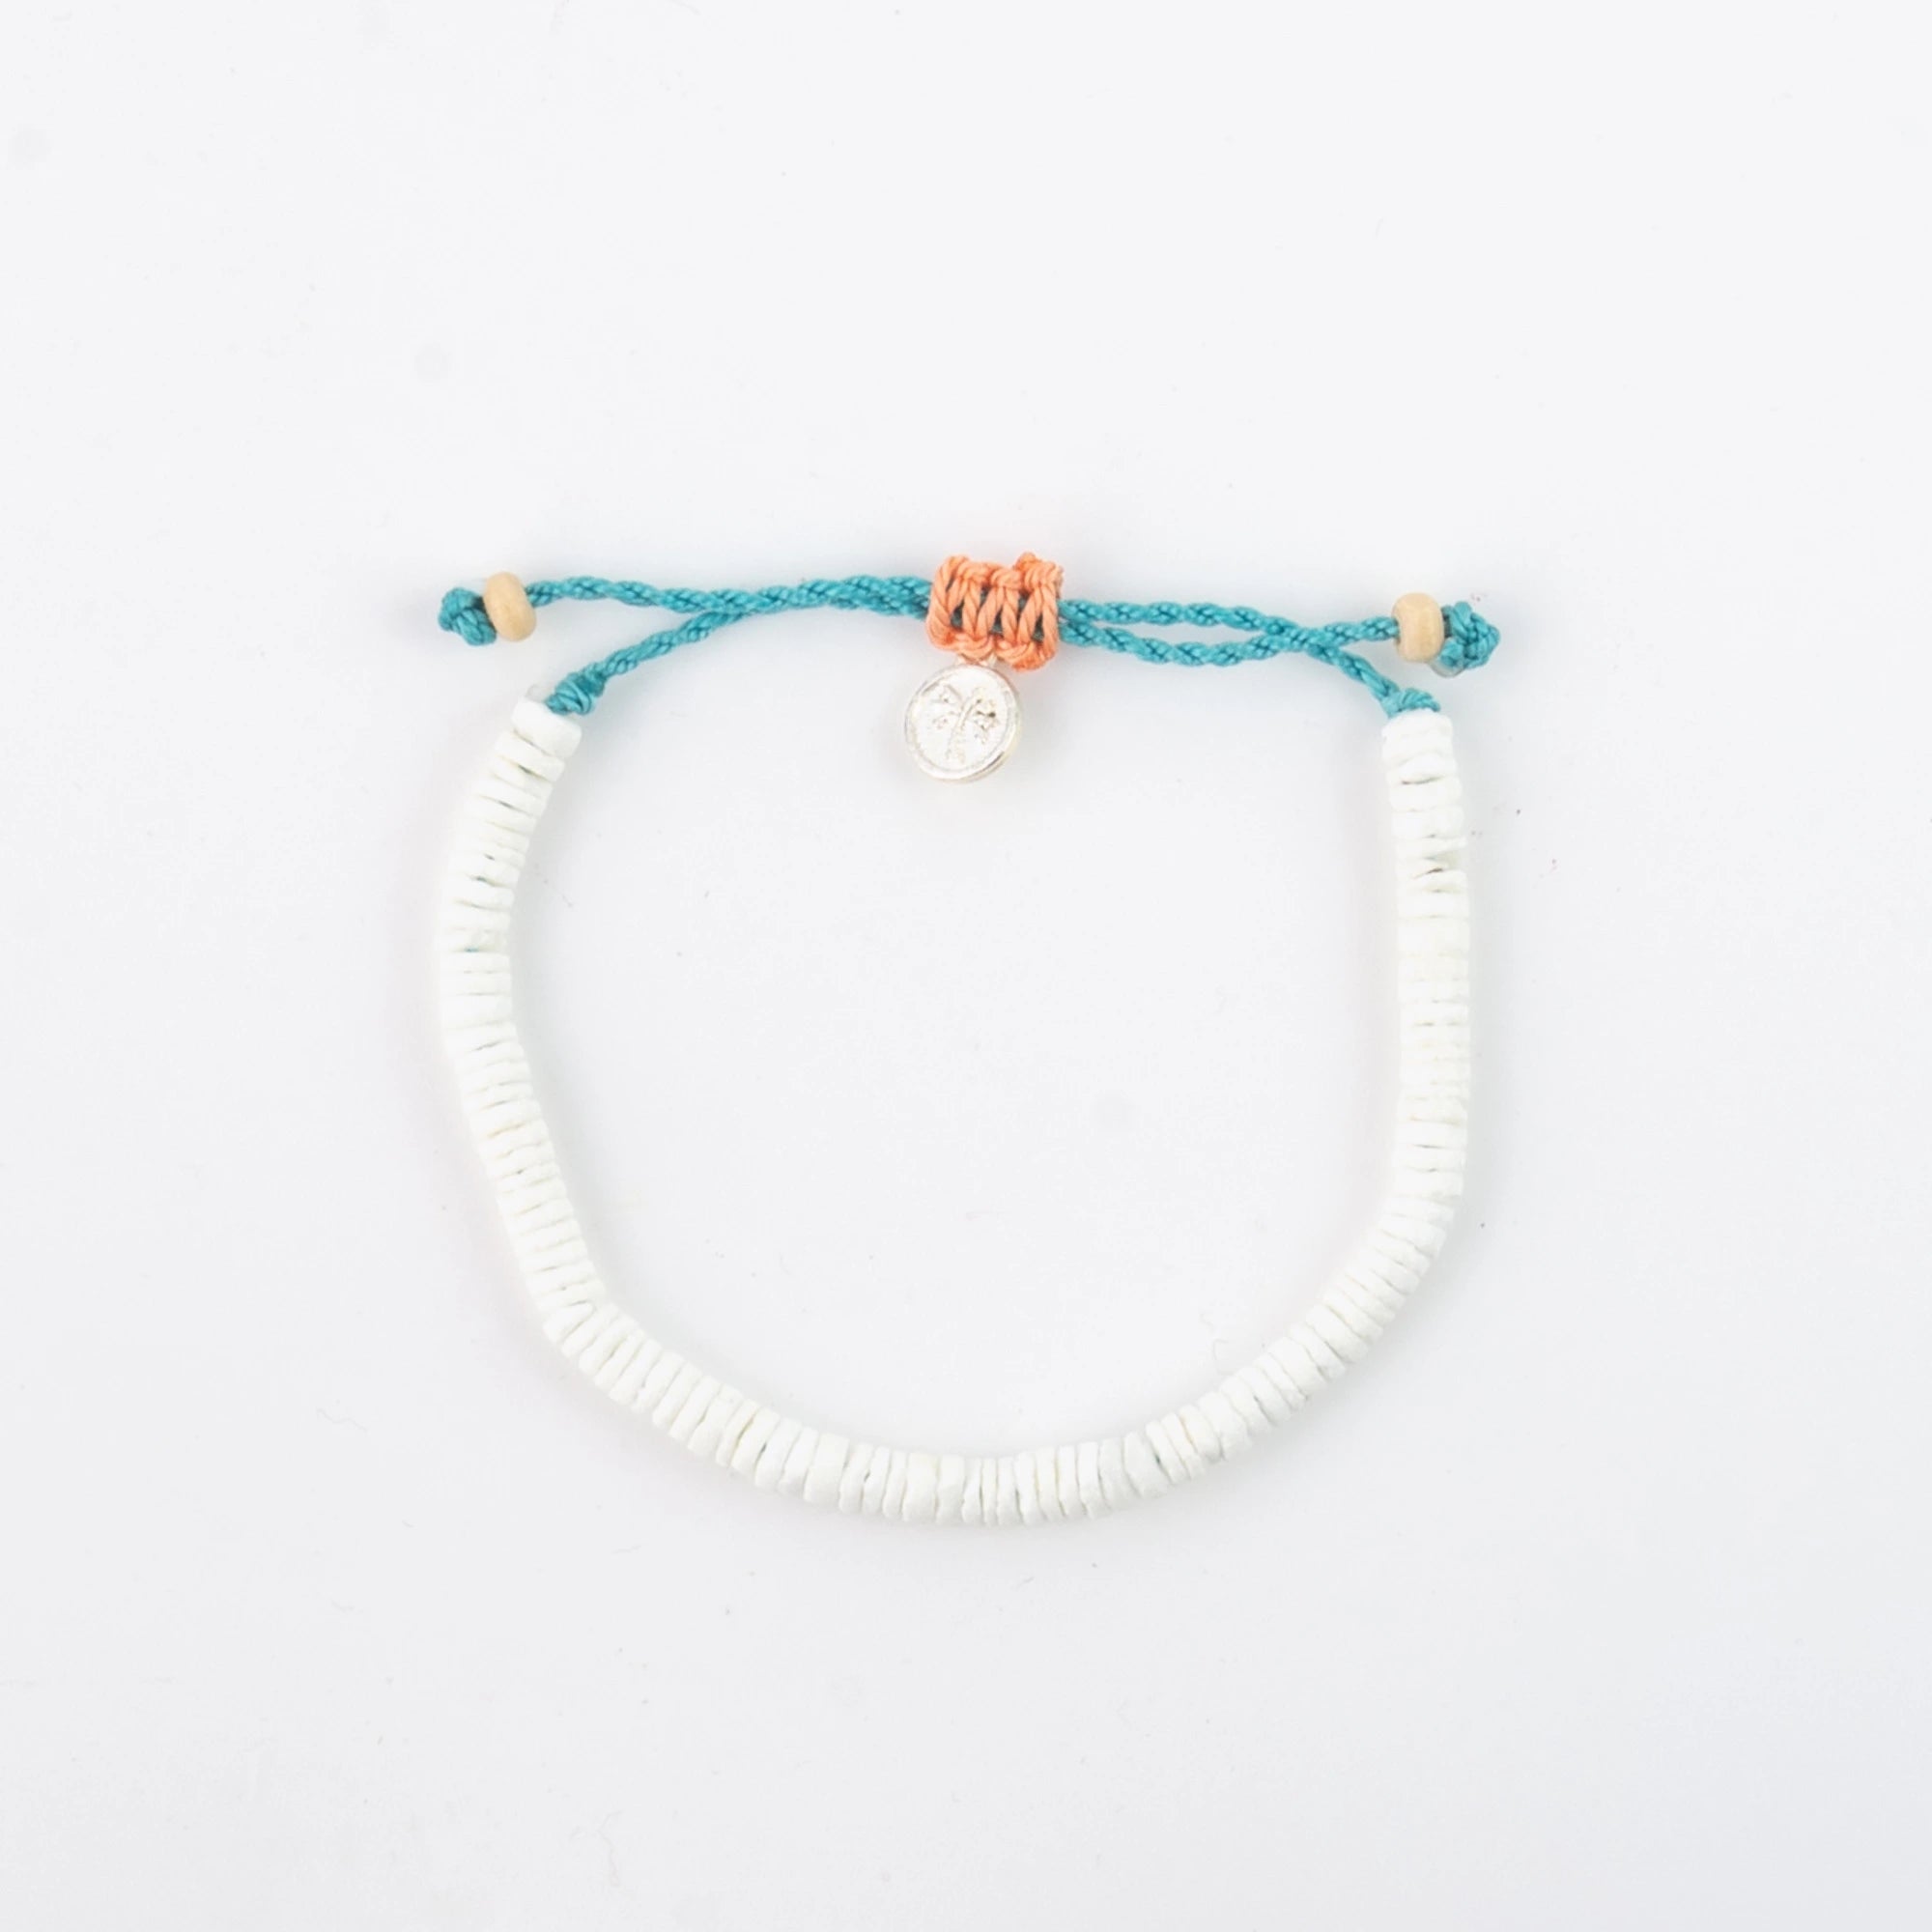 Coral Bay Handmade Bracelet Set - Pineapple Island